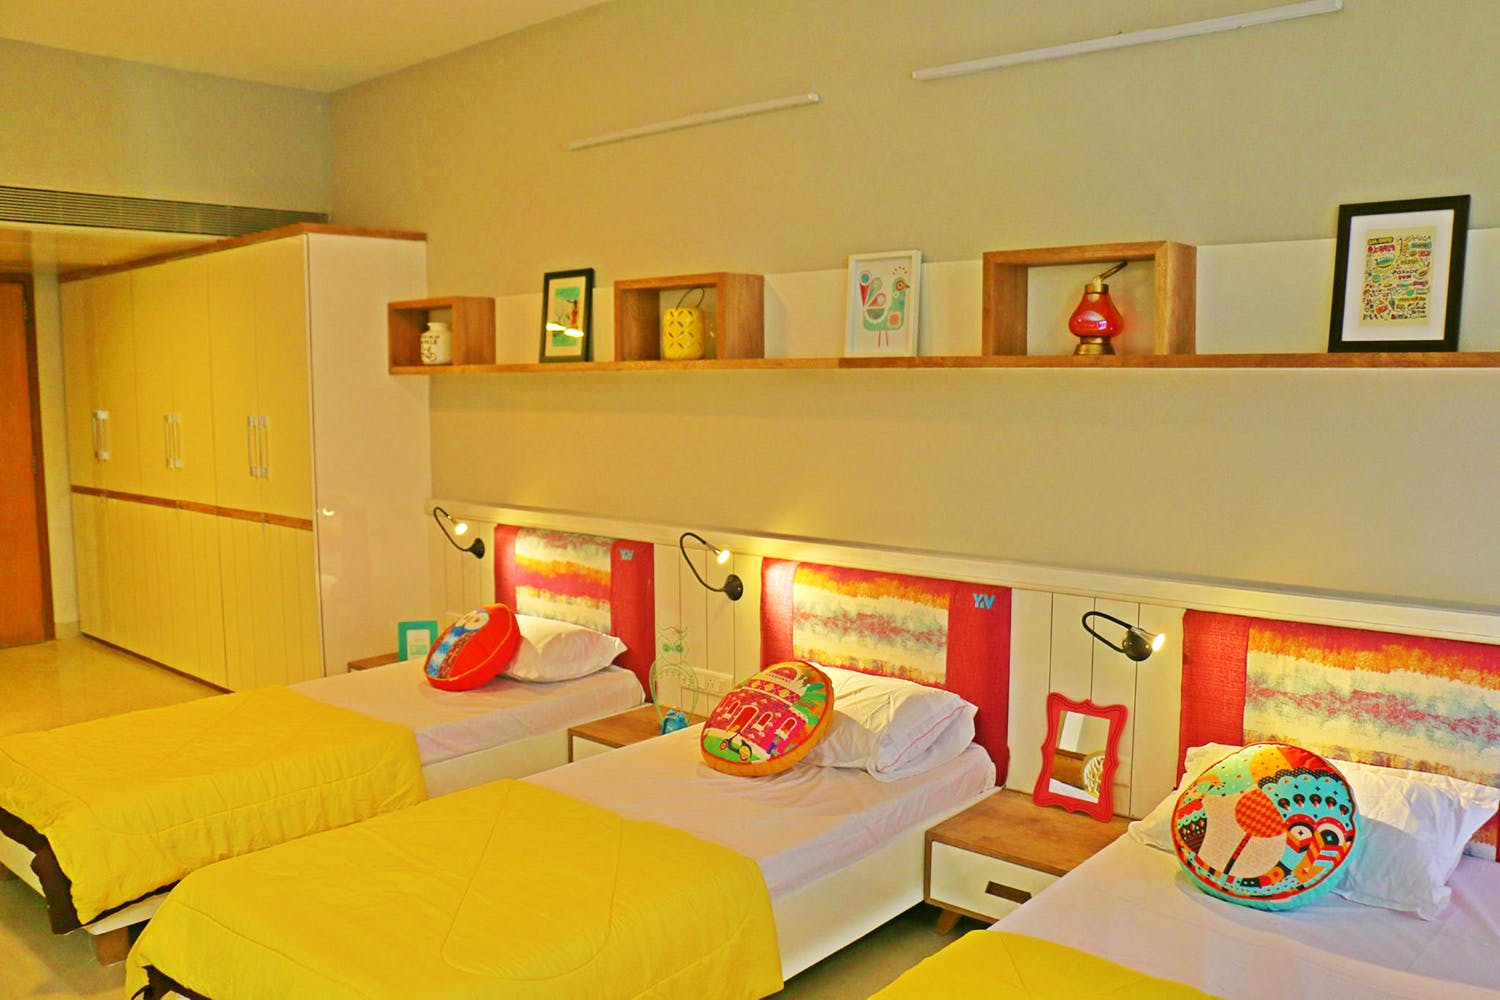 Room,Furniture,Bed,Bedroom,Property,Interior design,Bed sheet,Yellow,Building,Bedding